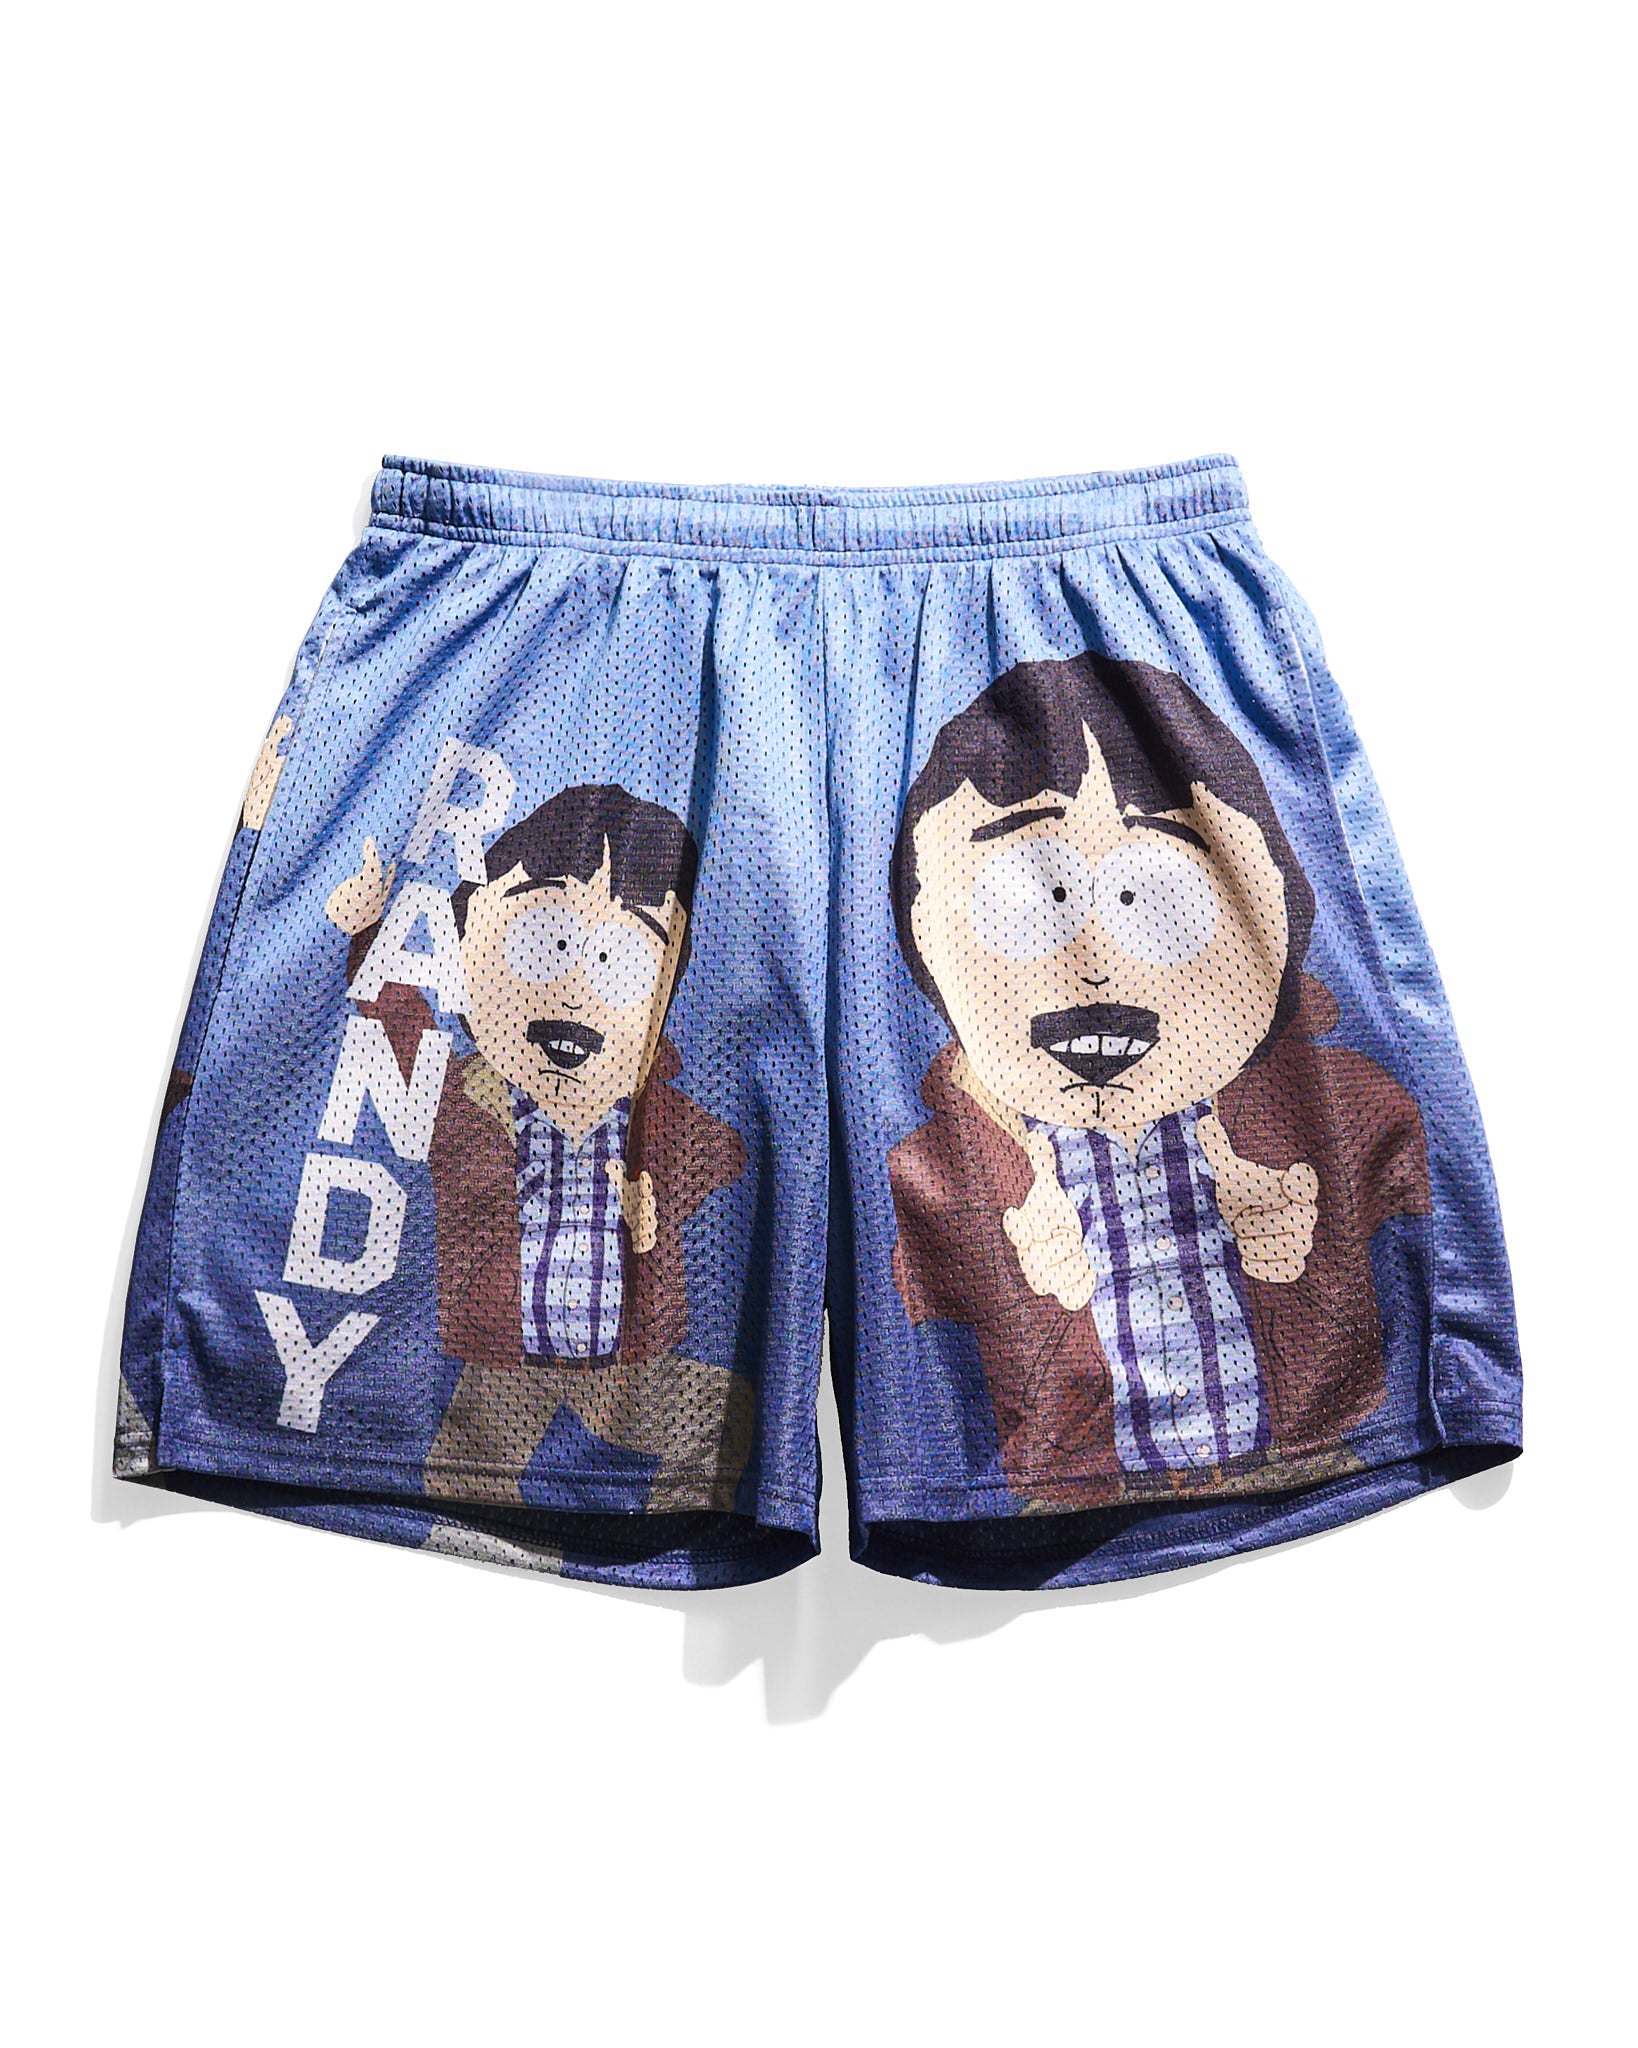 South Park Randy Marsh Retro Shorts